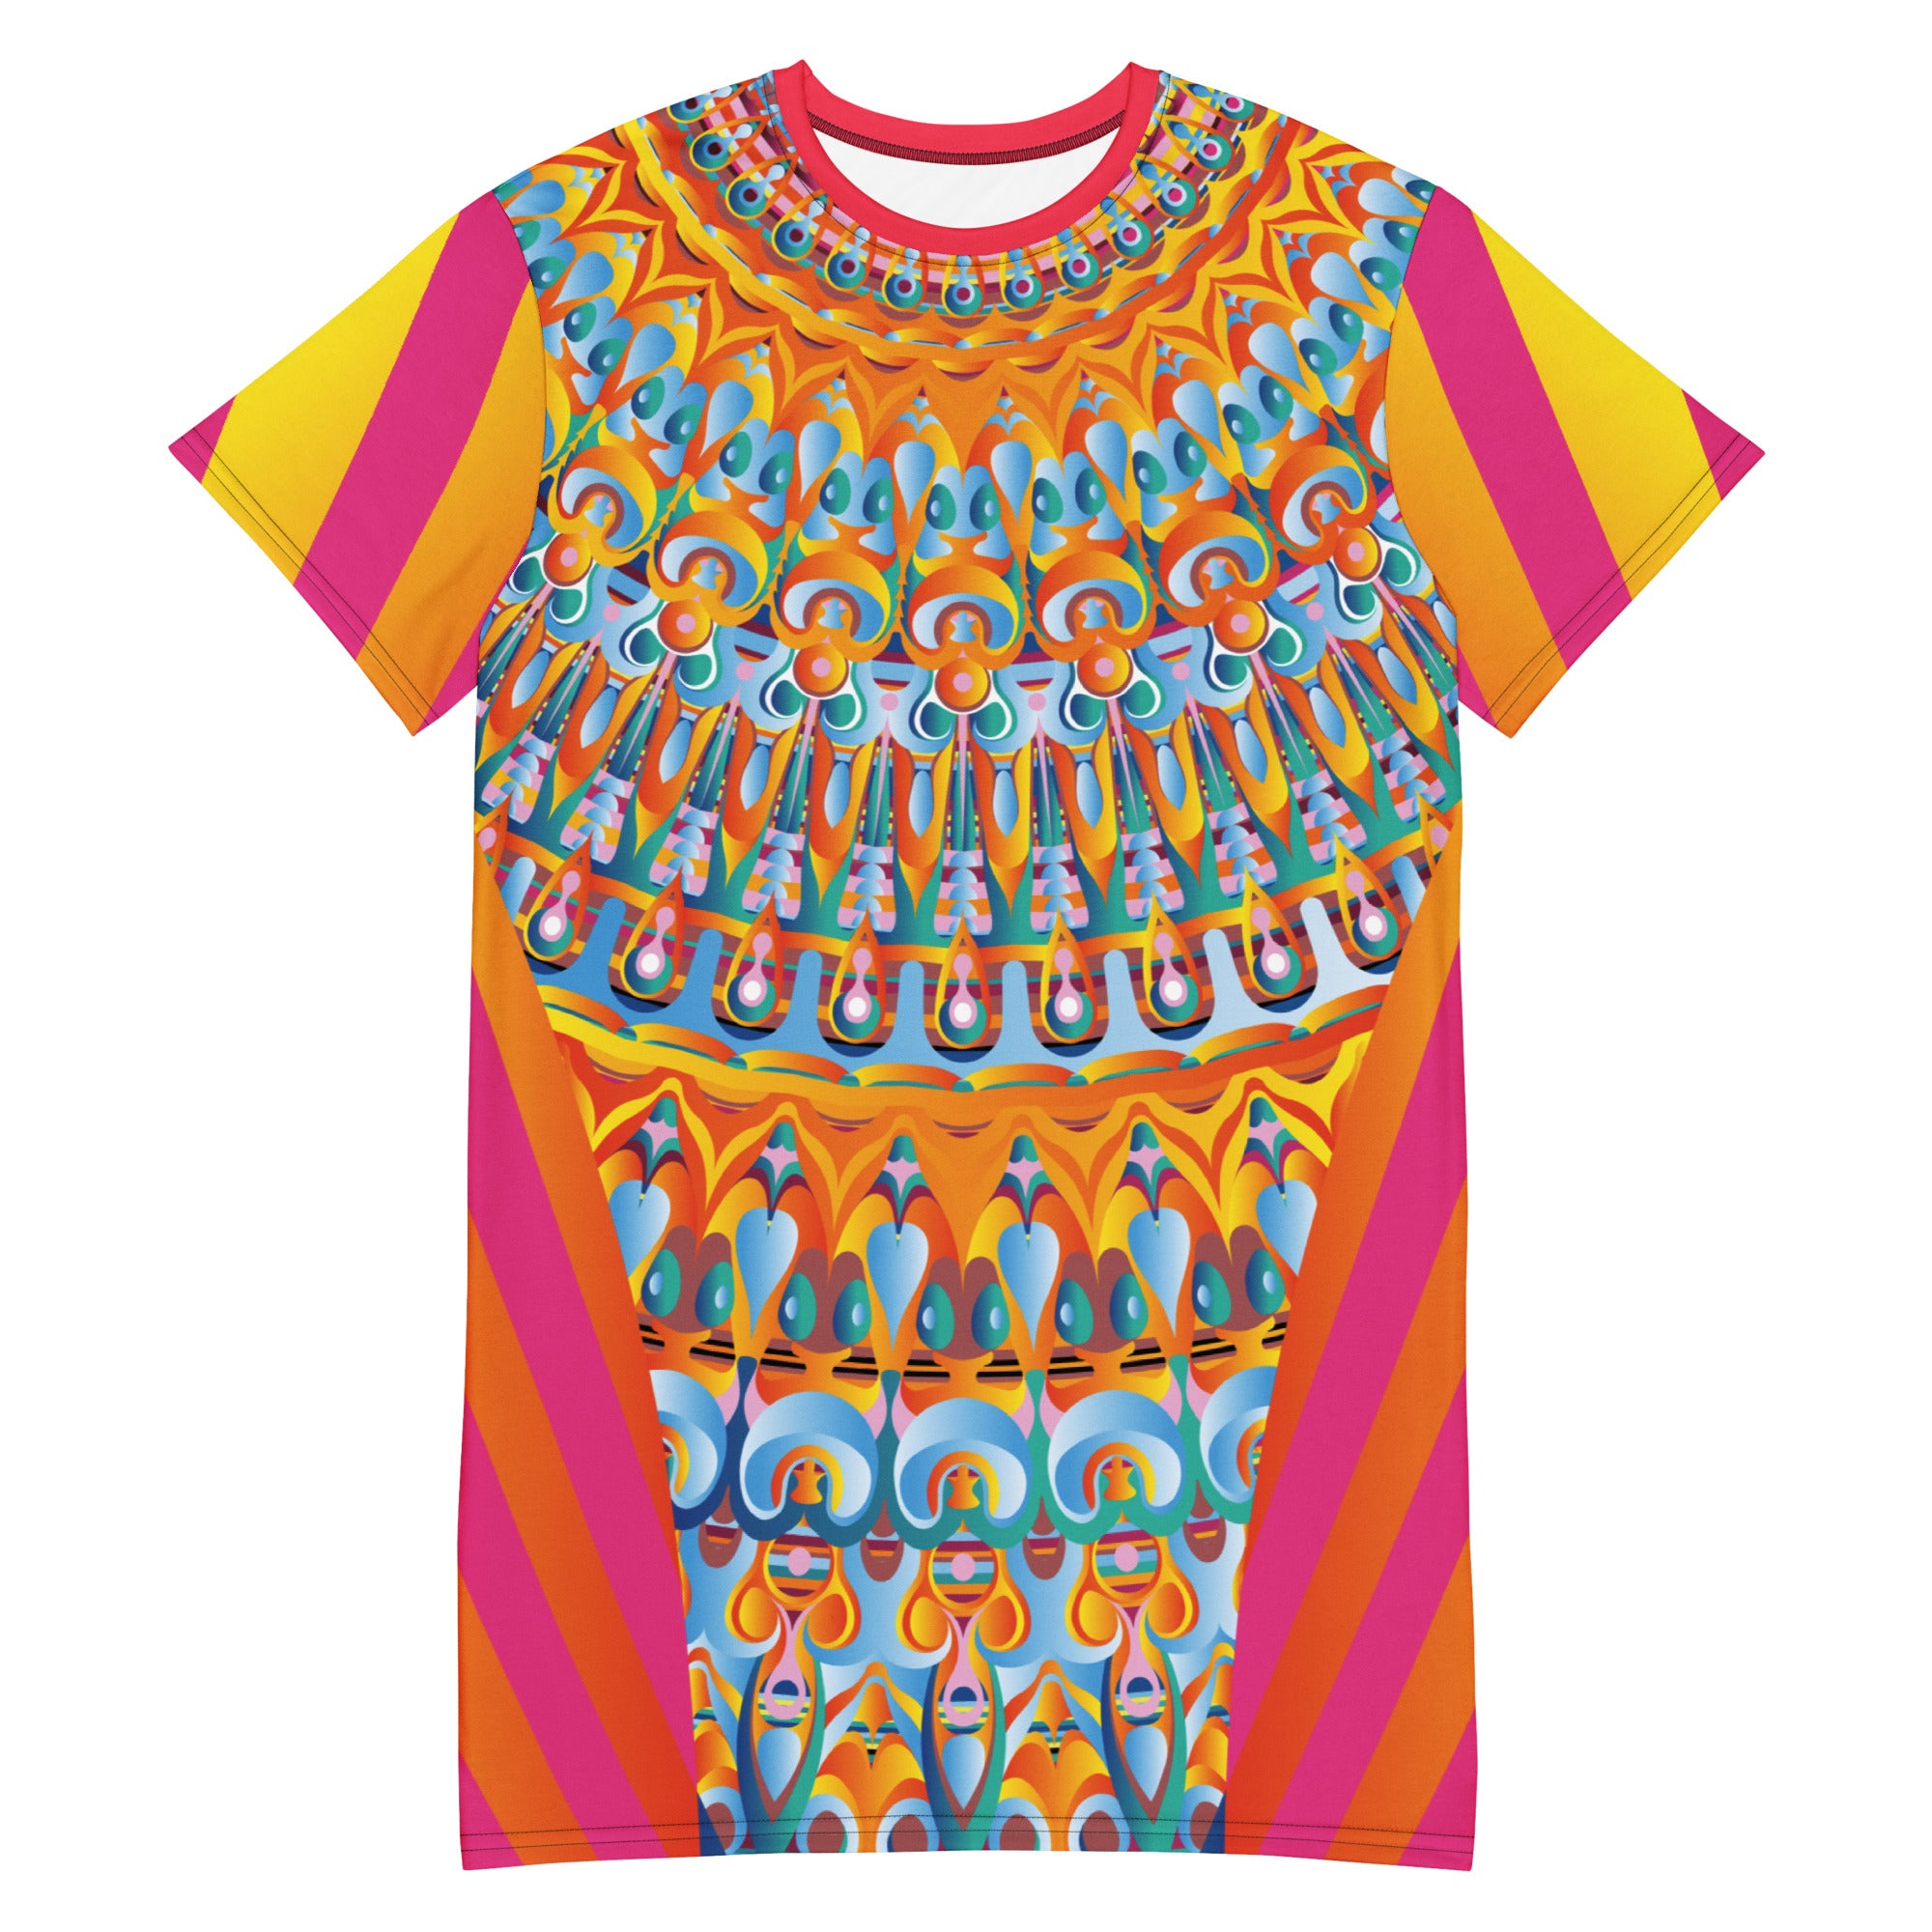 Tricahue T-shirt dress